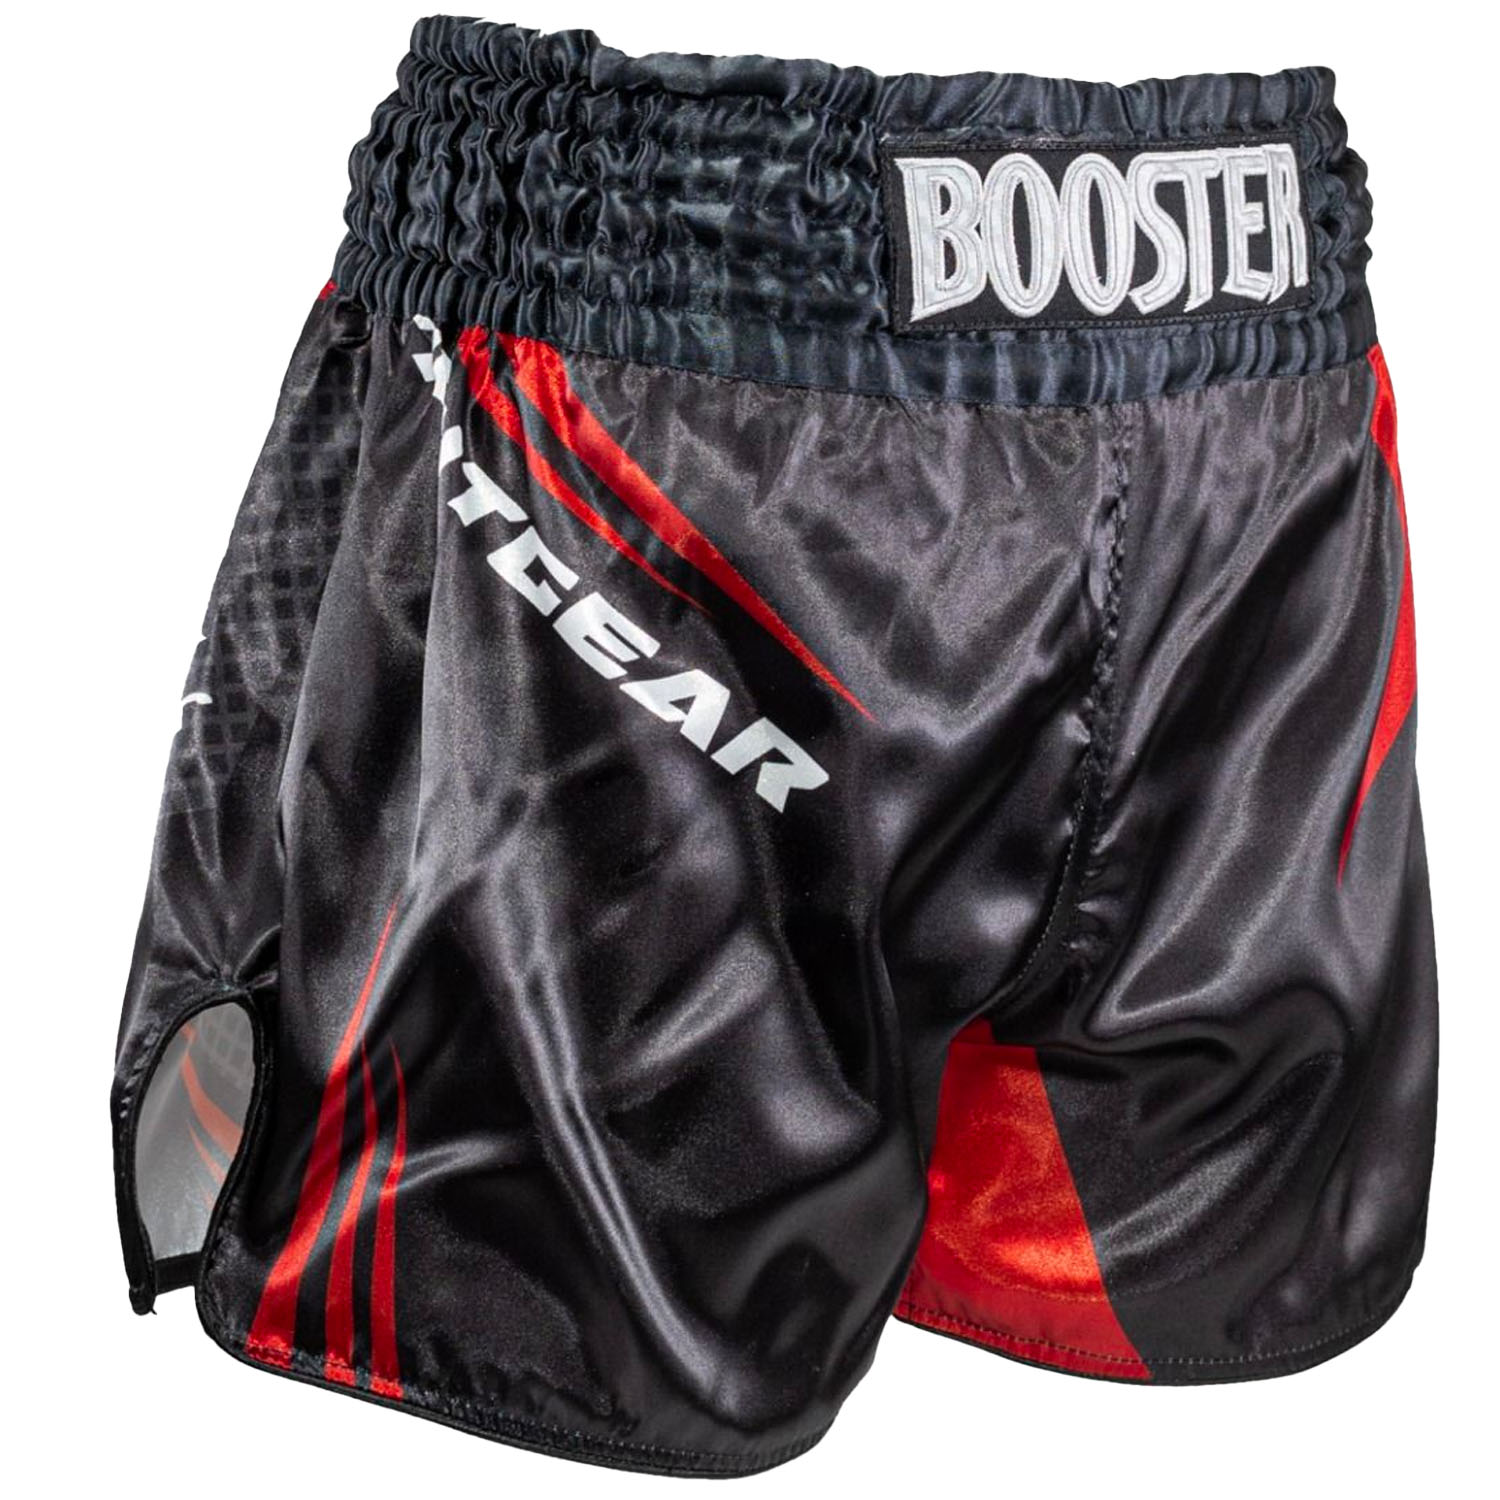 Booster Muay Thai Shorts, AD Xplosion 2, schwarz-rot, M